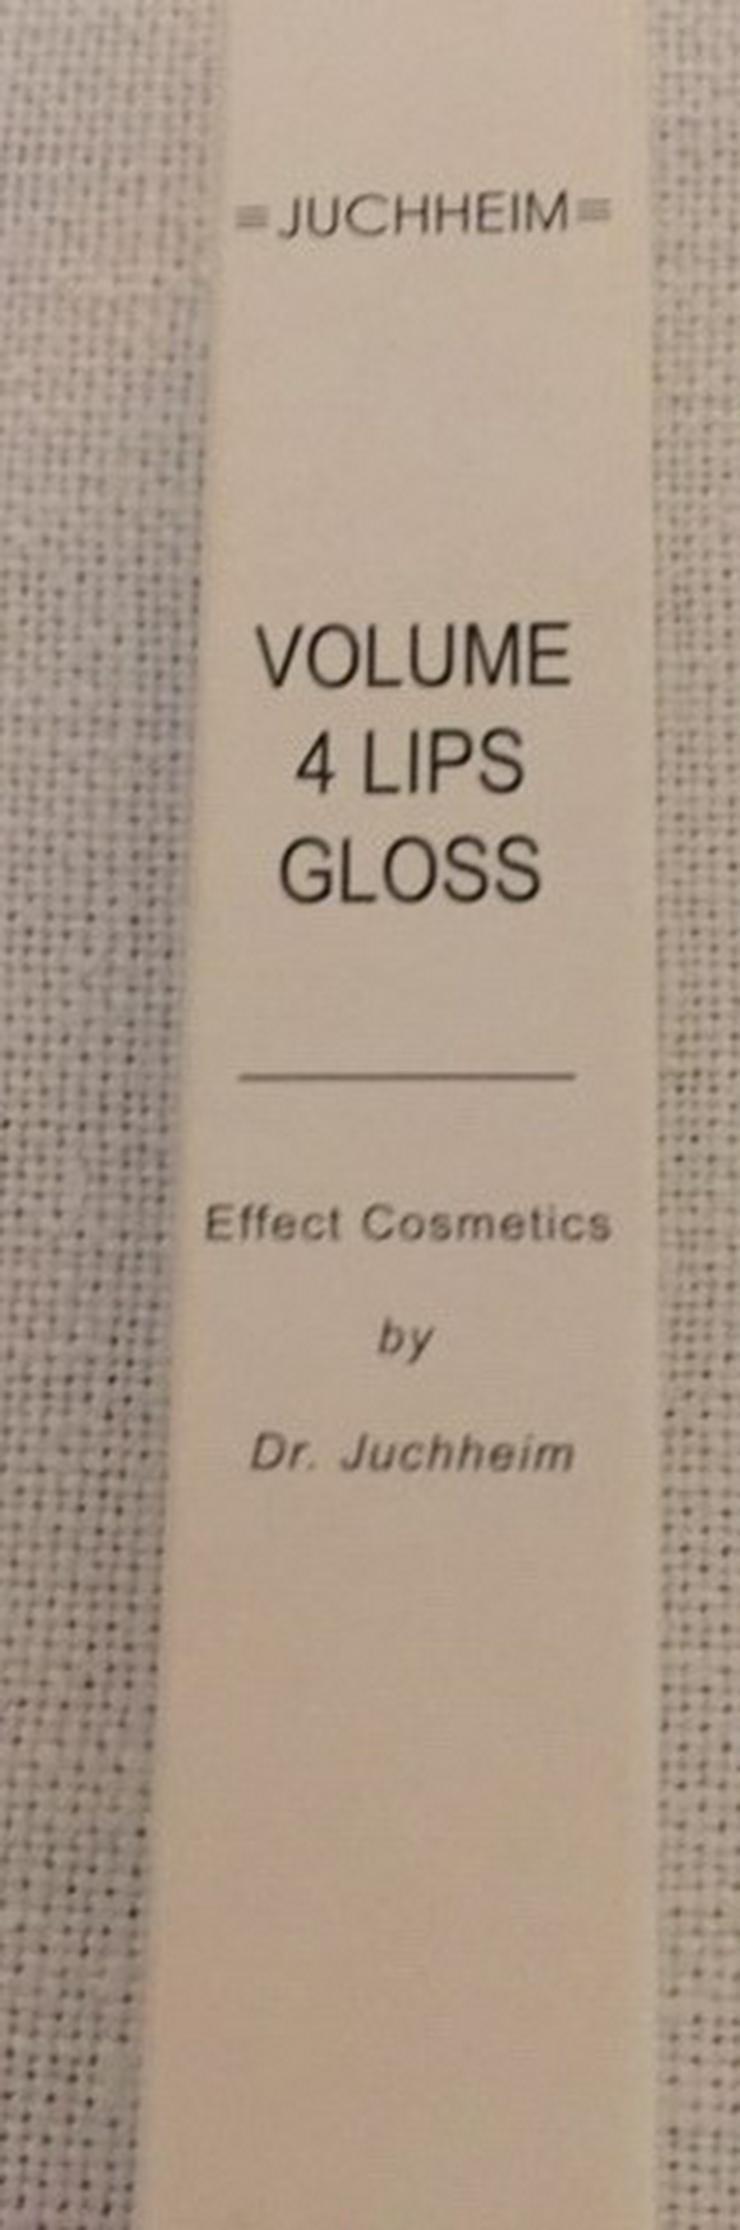 Volume 4 Lips Gloss